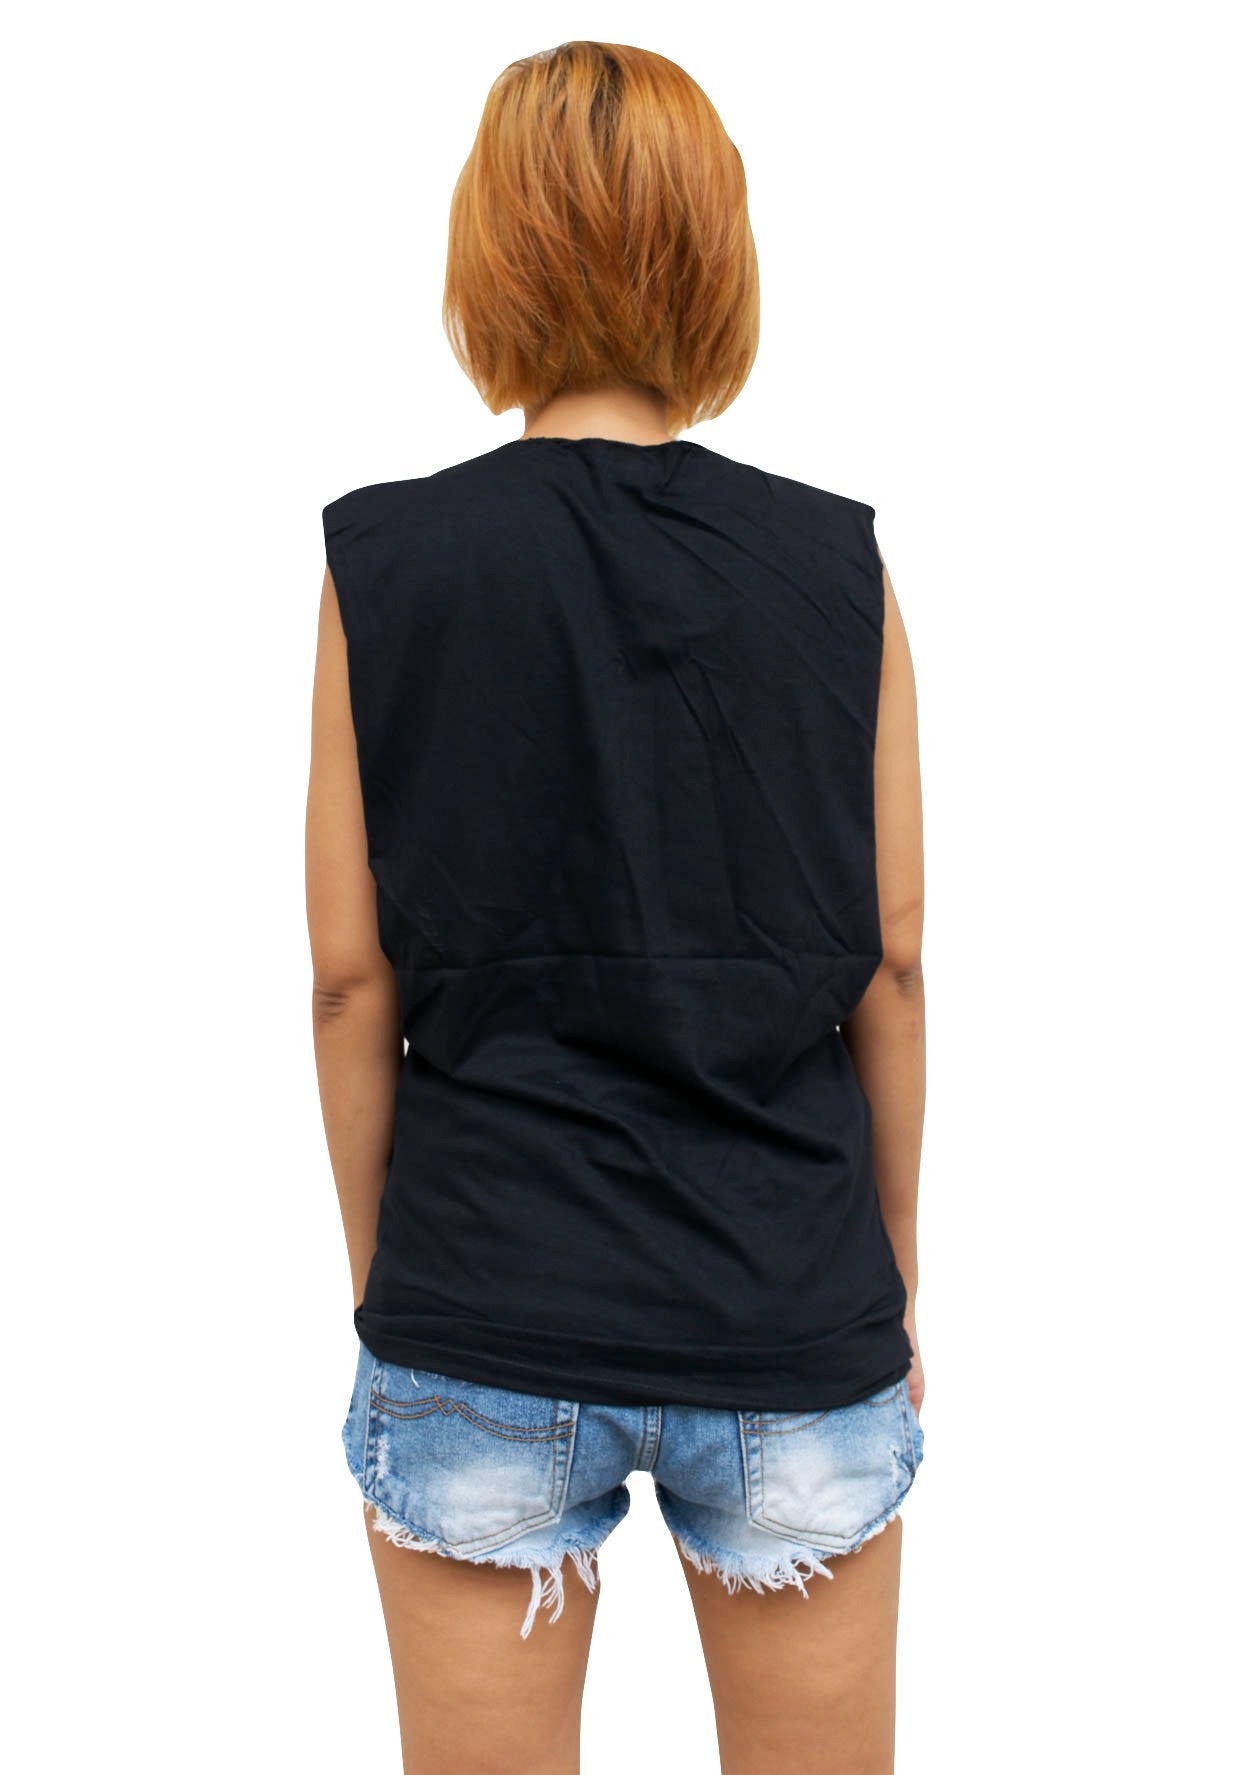 Ladies Michael Jackson Vest Tank-Top Singlet Sleeveless T-Shirt